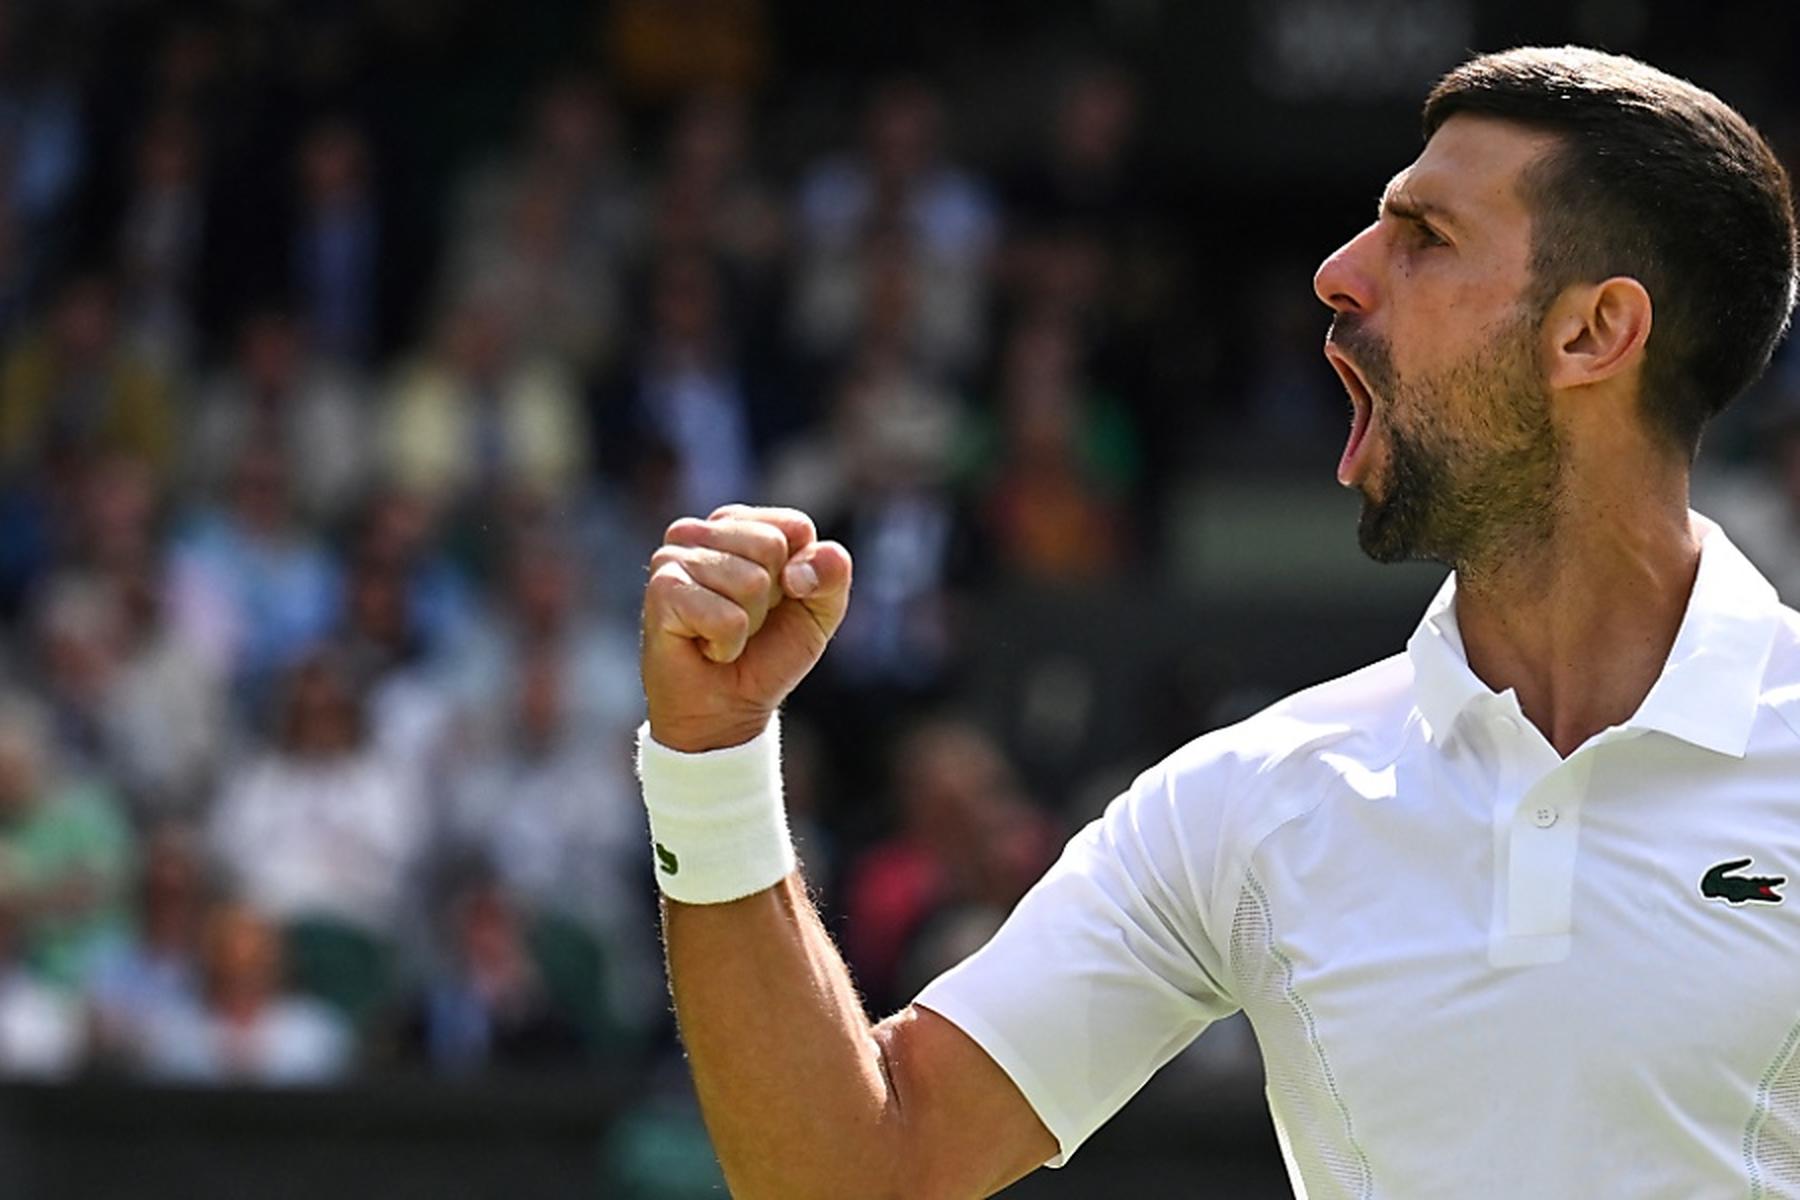 London: Djokovic mit Mühe in dritte Wimbledon-Runde, Hurkacz out